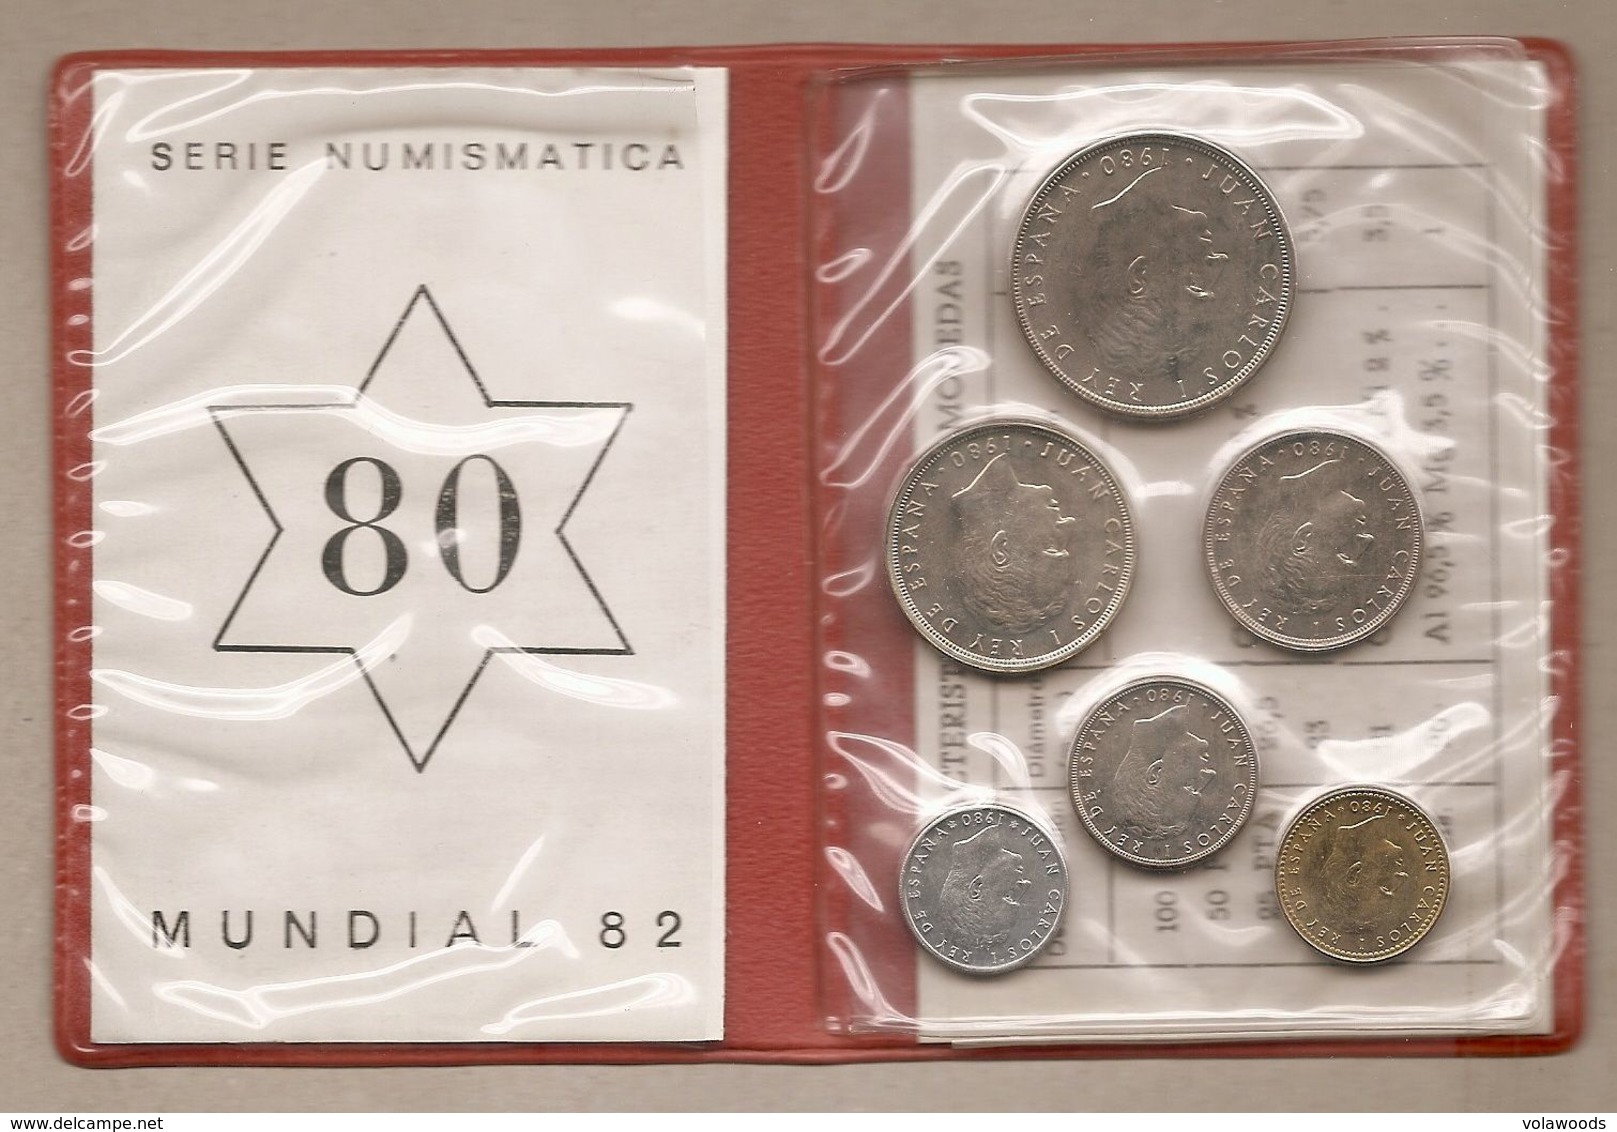 Spagna - Serie Numismatica 1980 FDC Ms11 "Mundial 82" - Mint Sets & Proof Sets